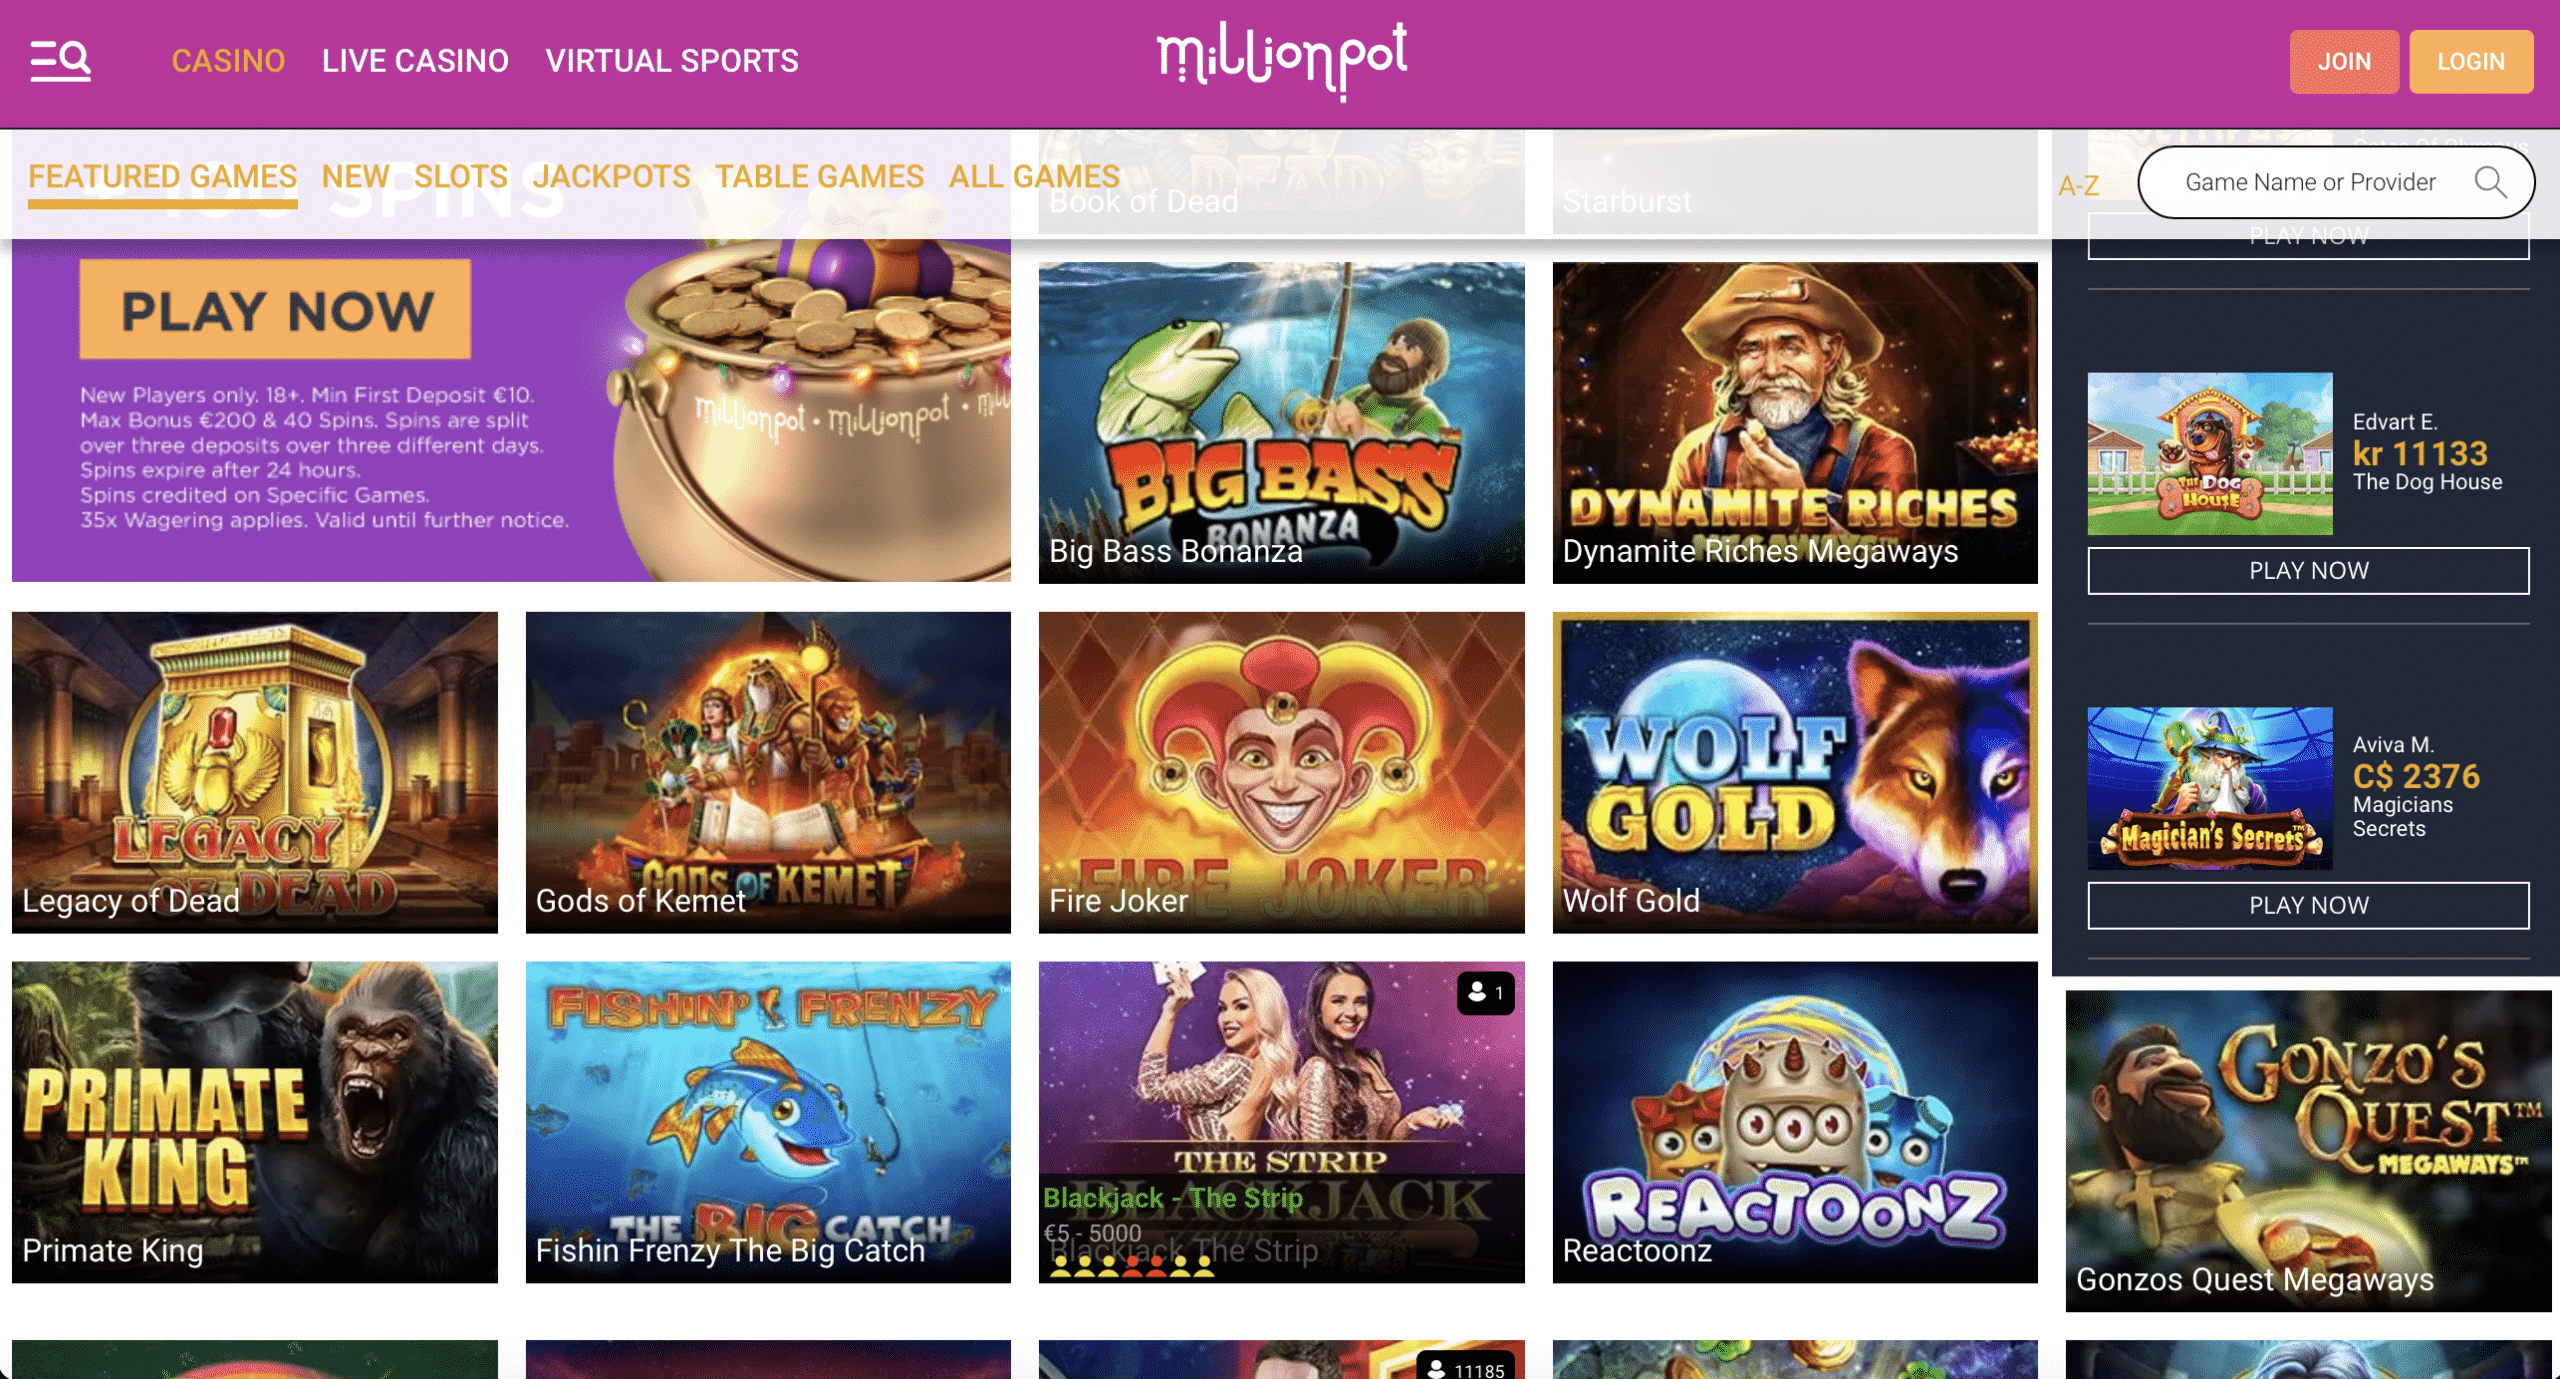 Millionpot Game Selection